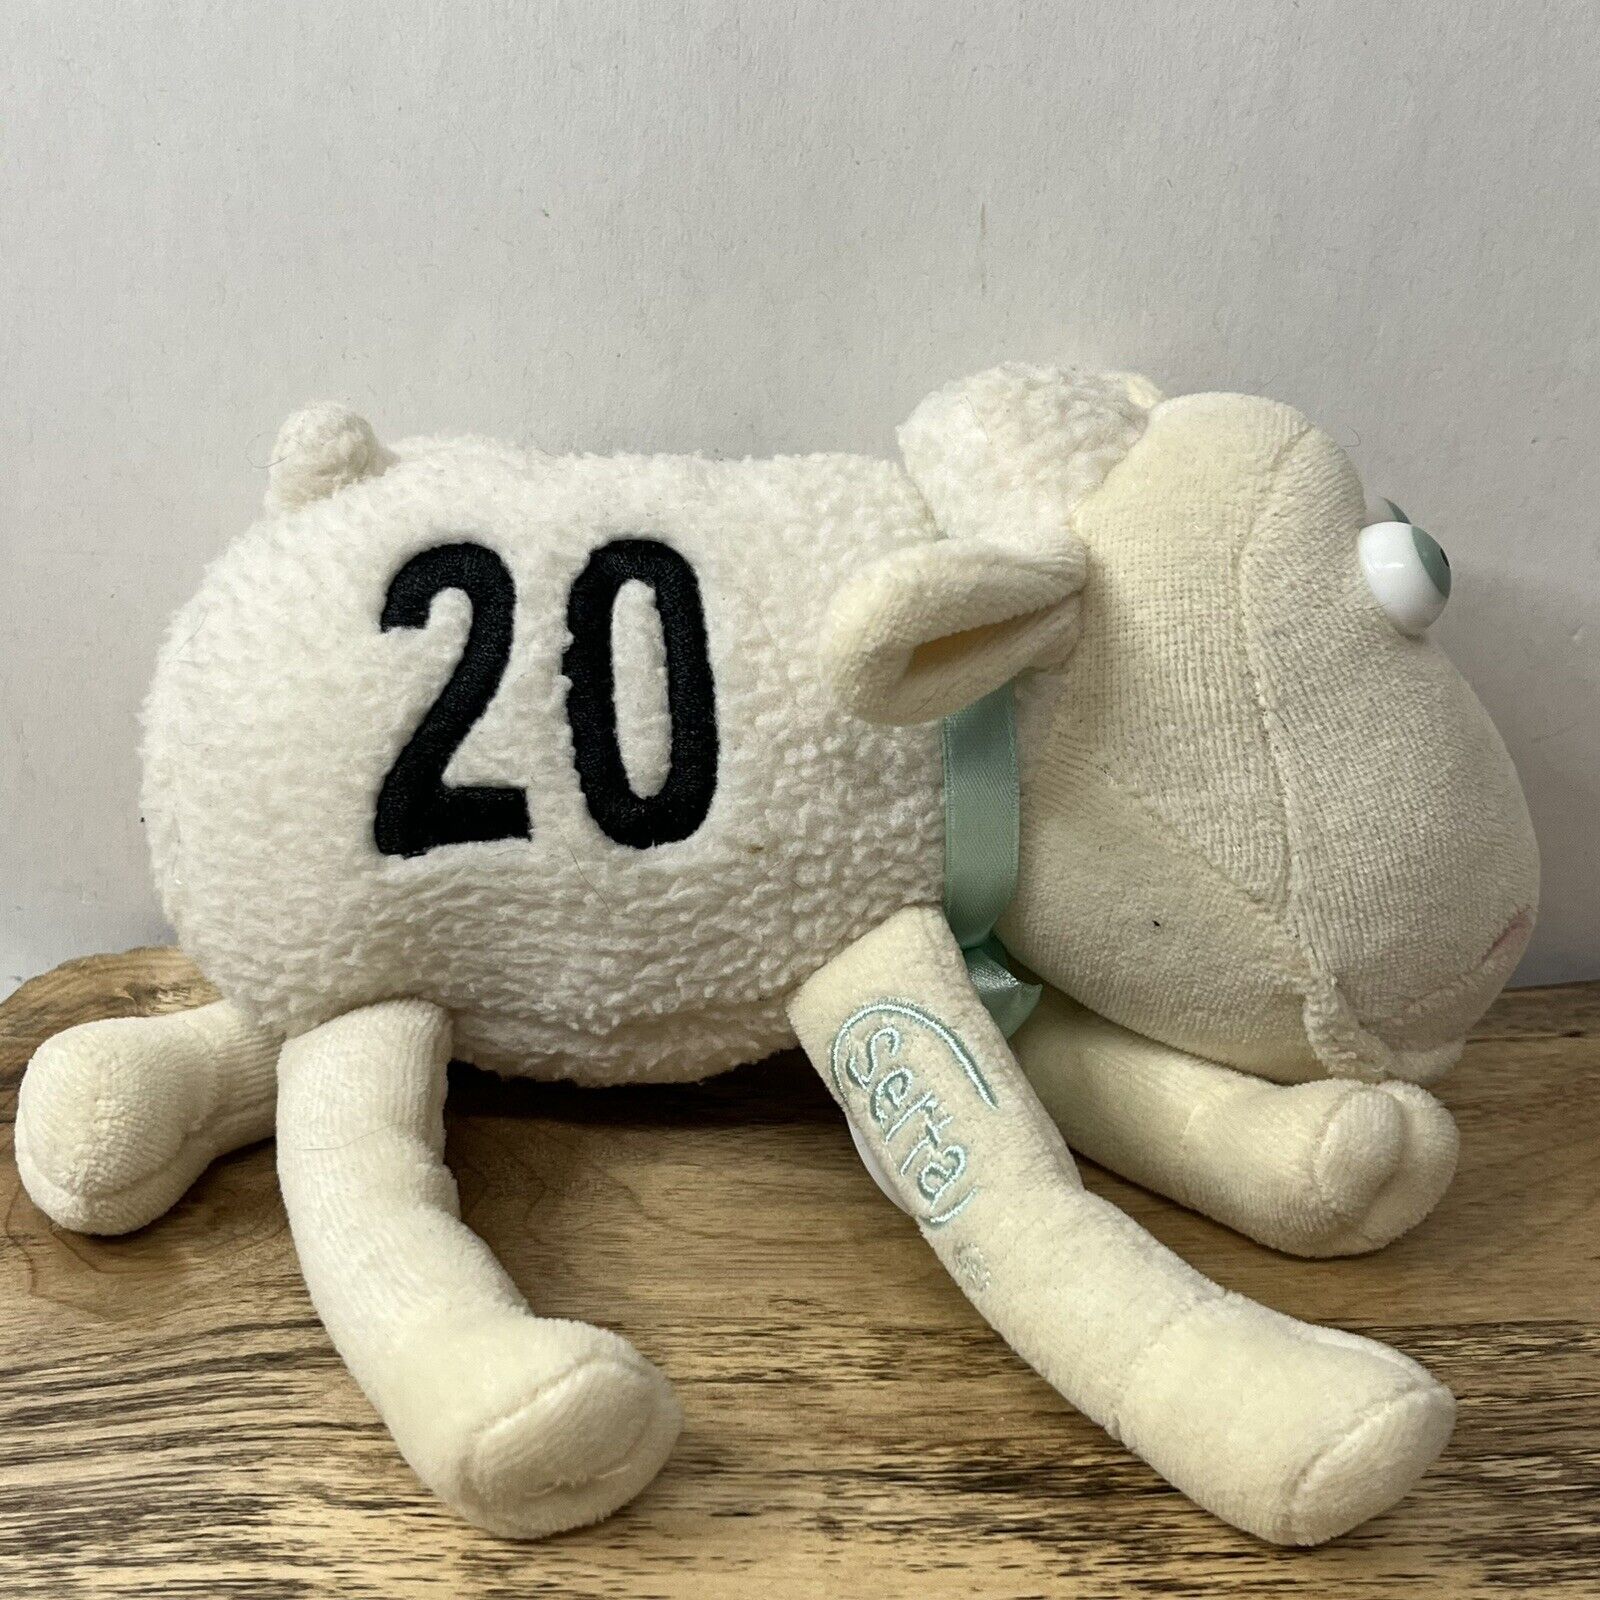 Serta Mattress Plush Counting Sheep #20 Stuffed Animal w/ Green Tag